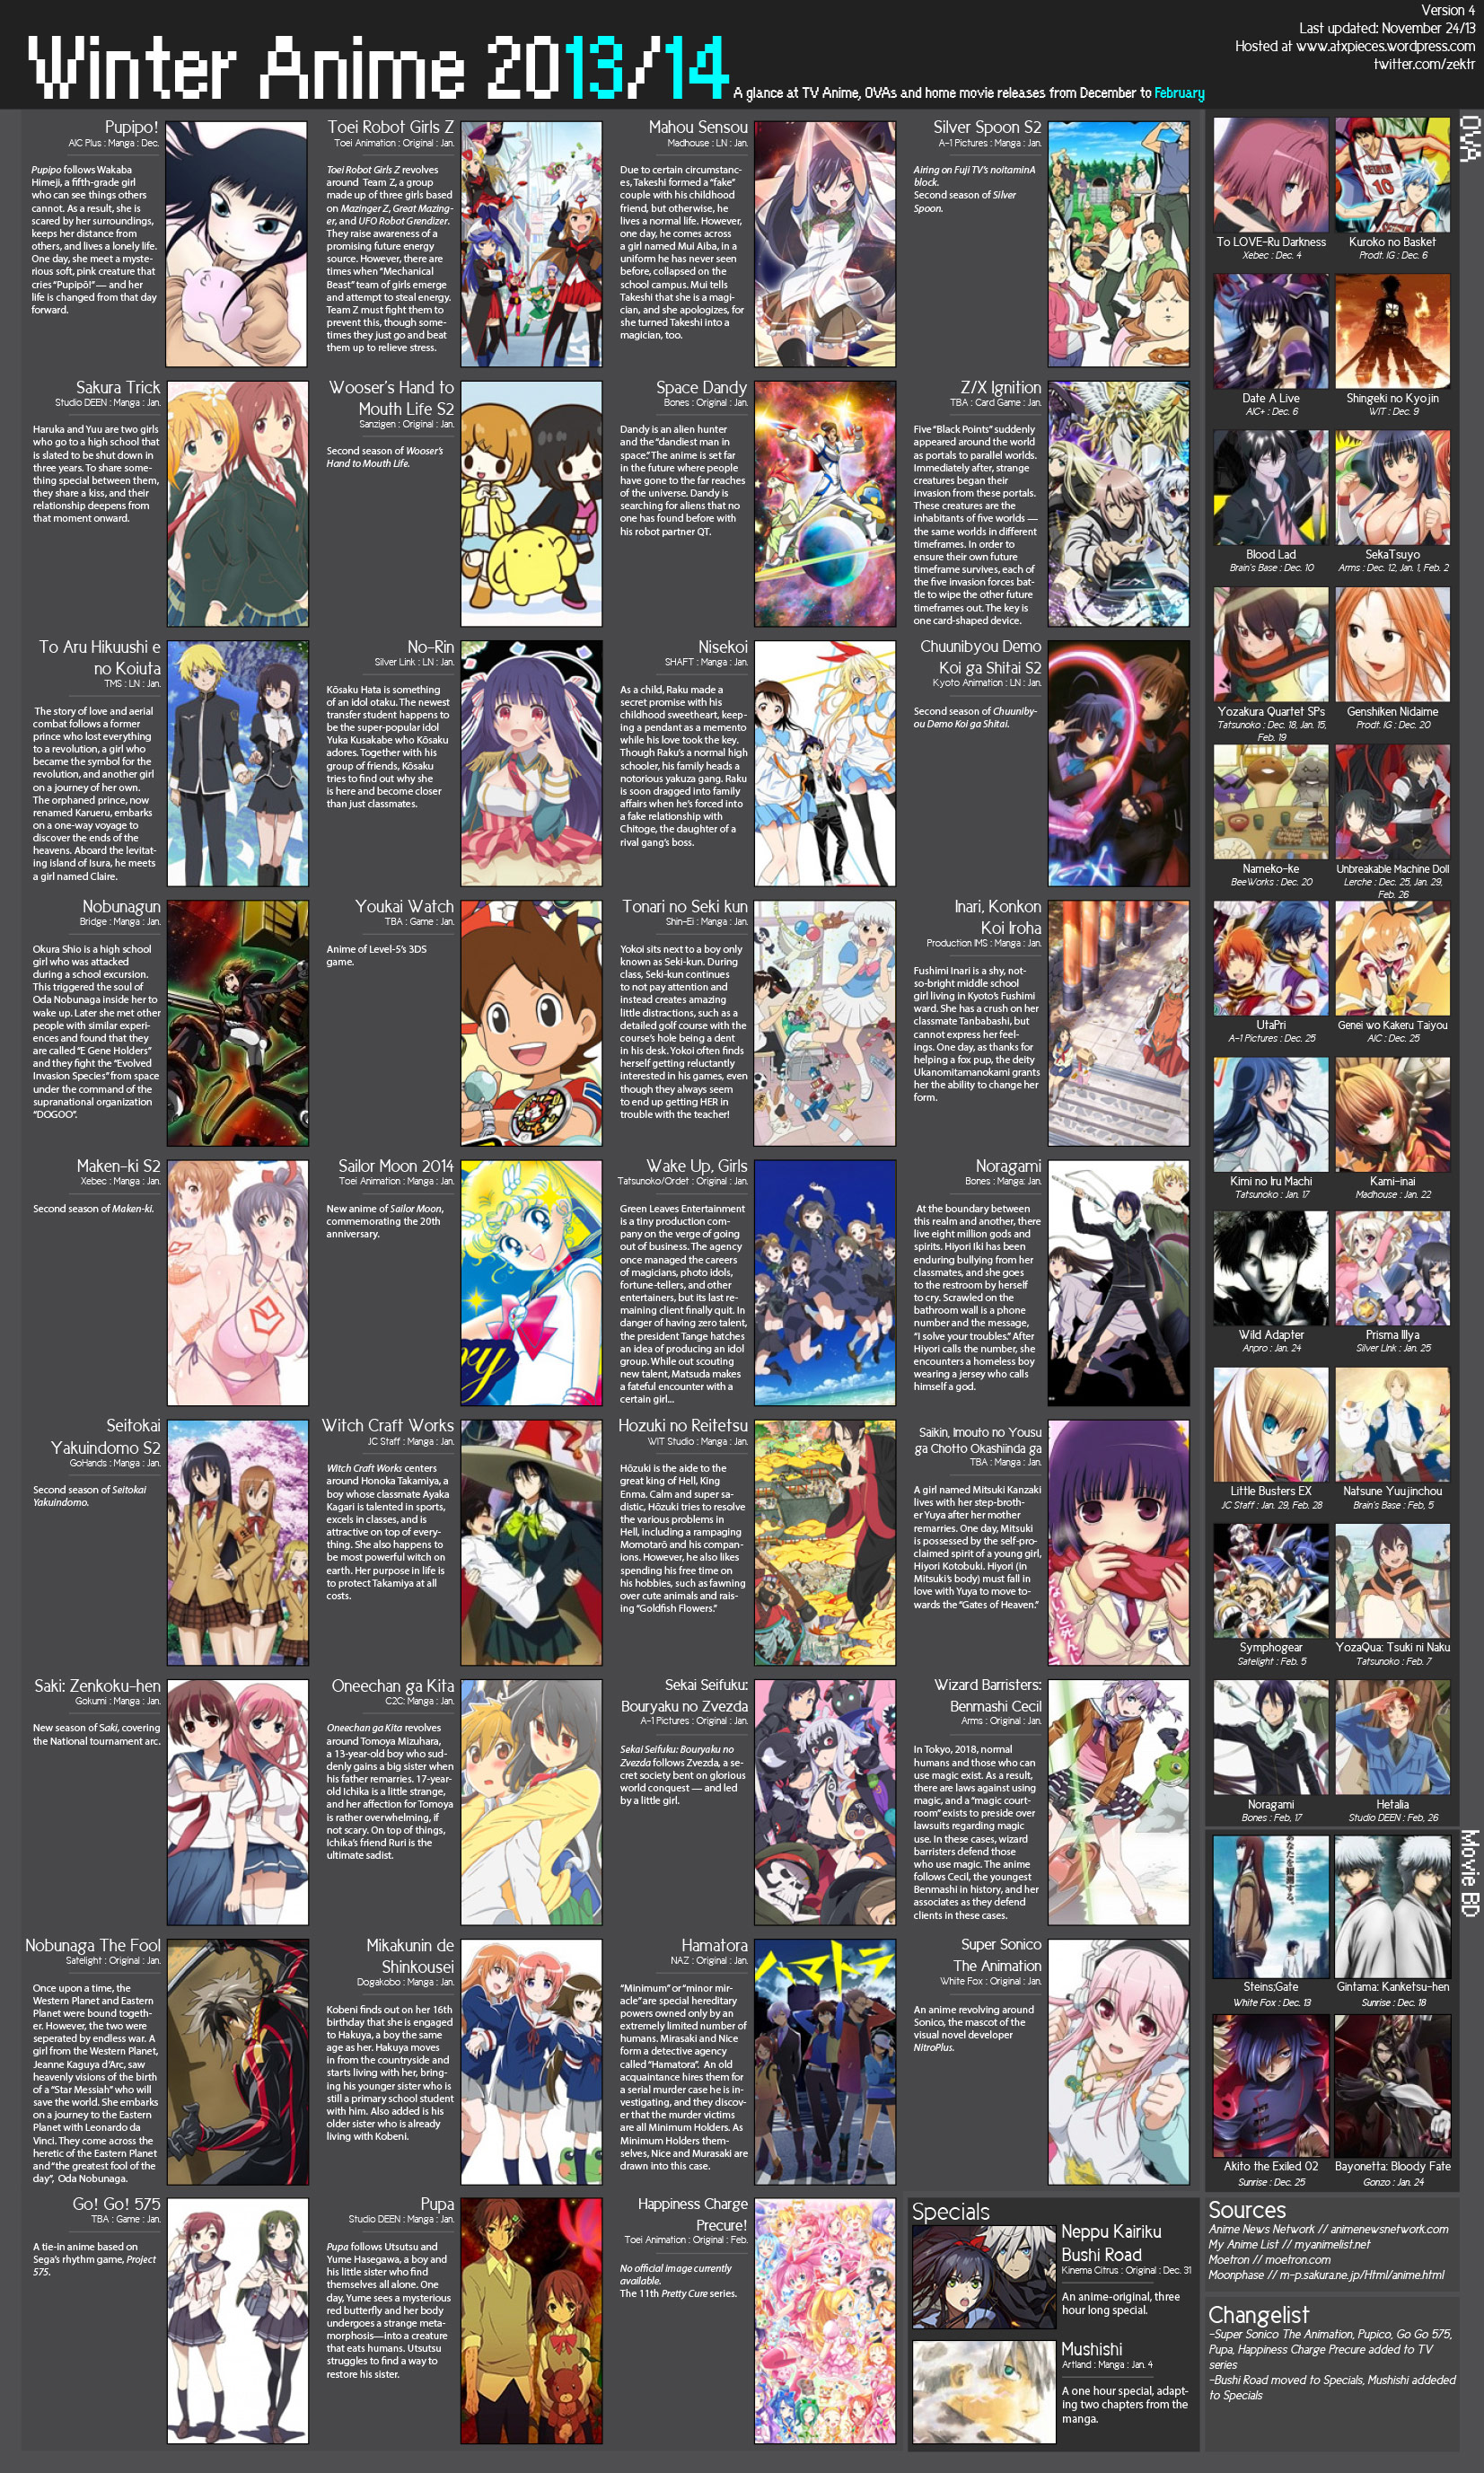 Anime Spring 2014 Preview